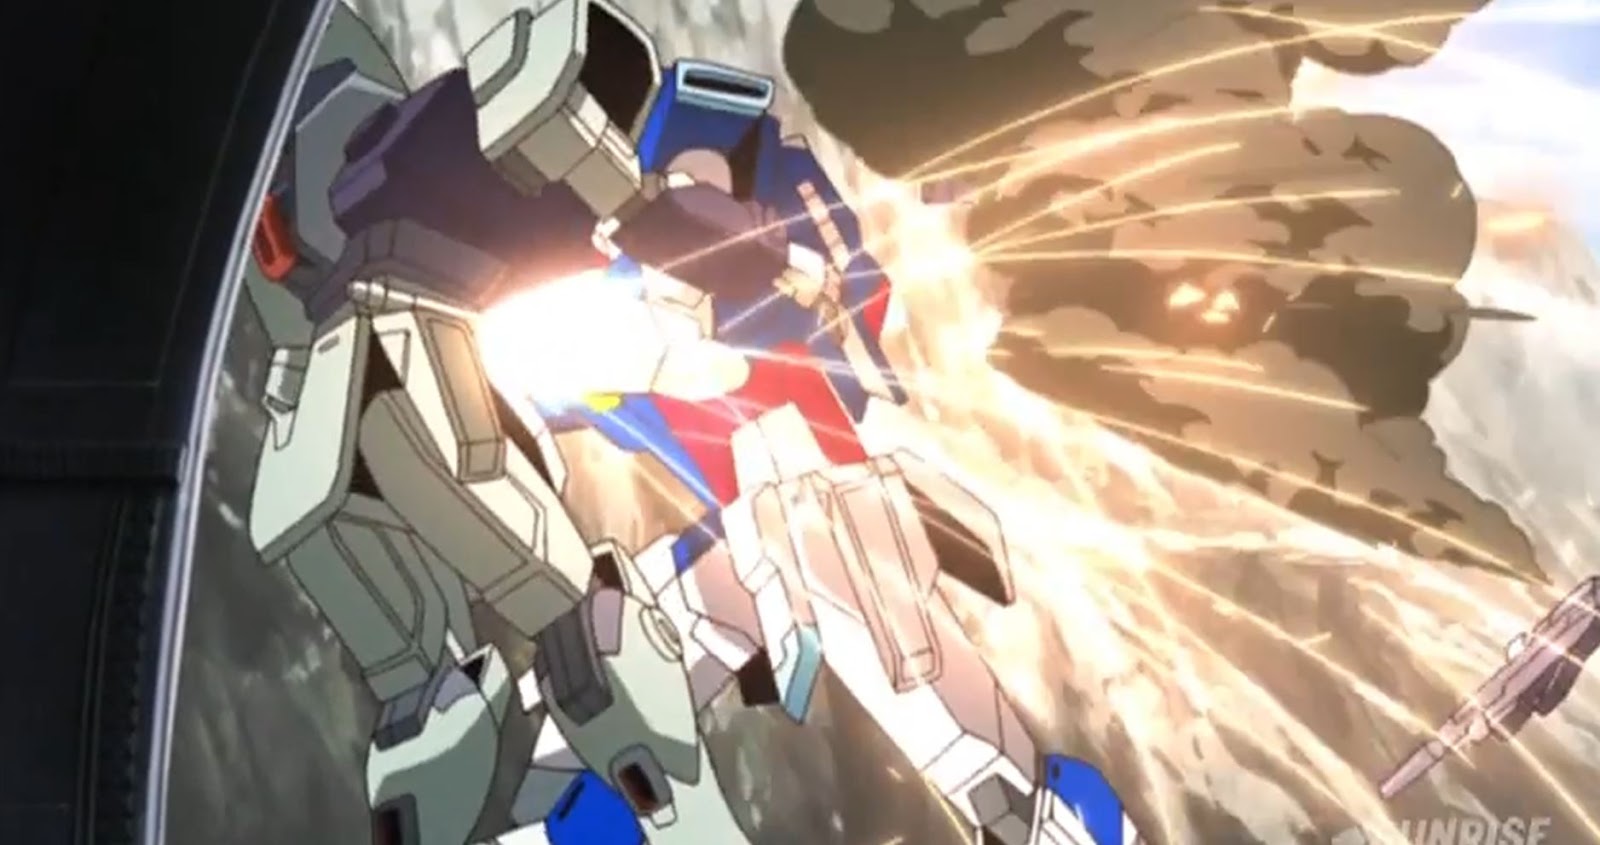 Gundam Seed Destiny Remastered Episode 18